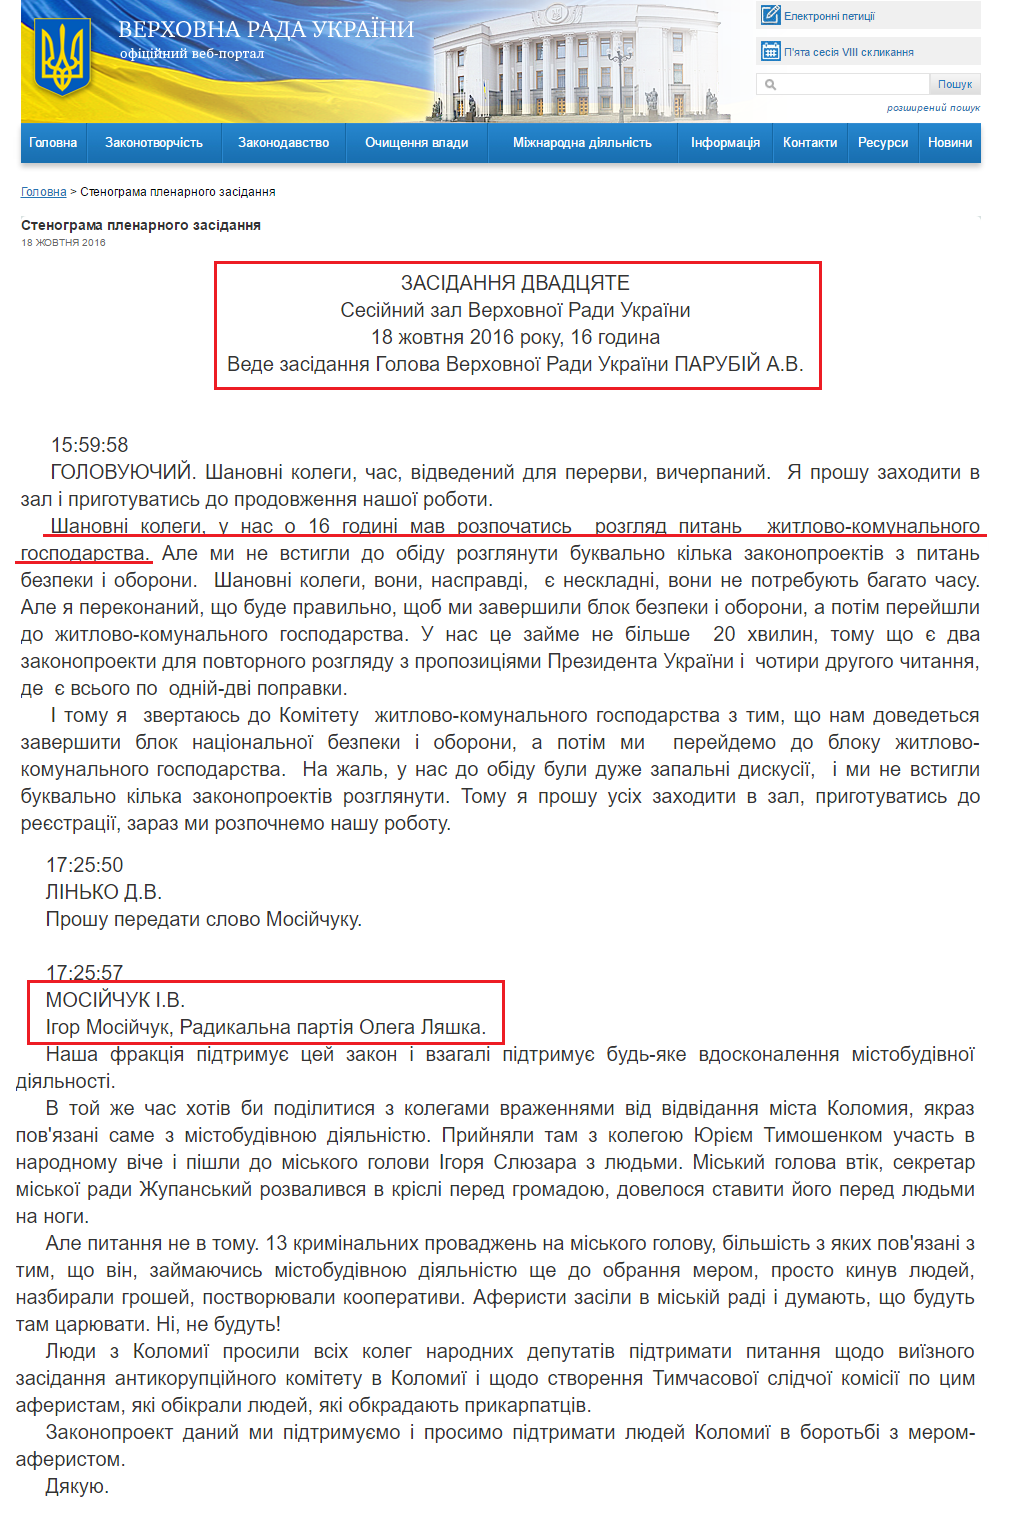 http://iportal.rada.gov.ua/meeting/stenogr/show/6333.html